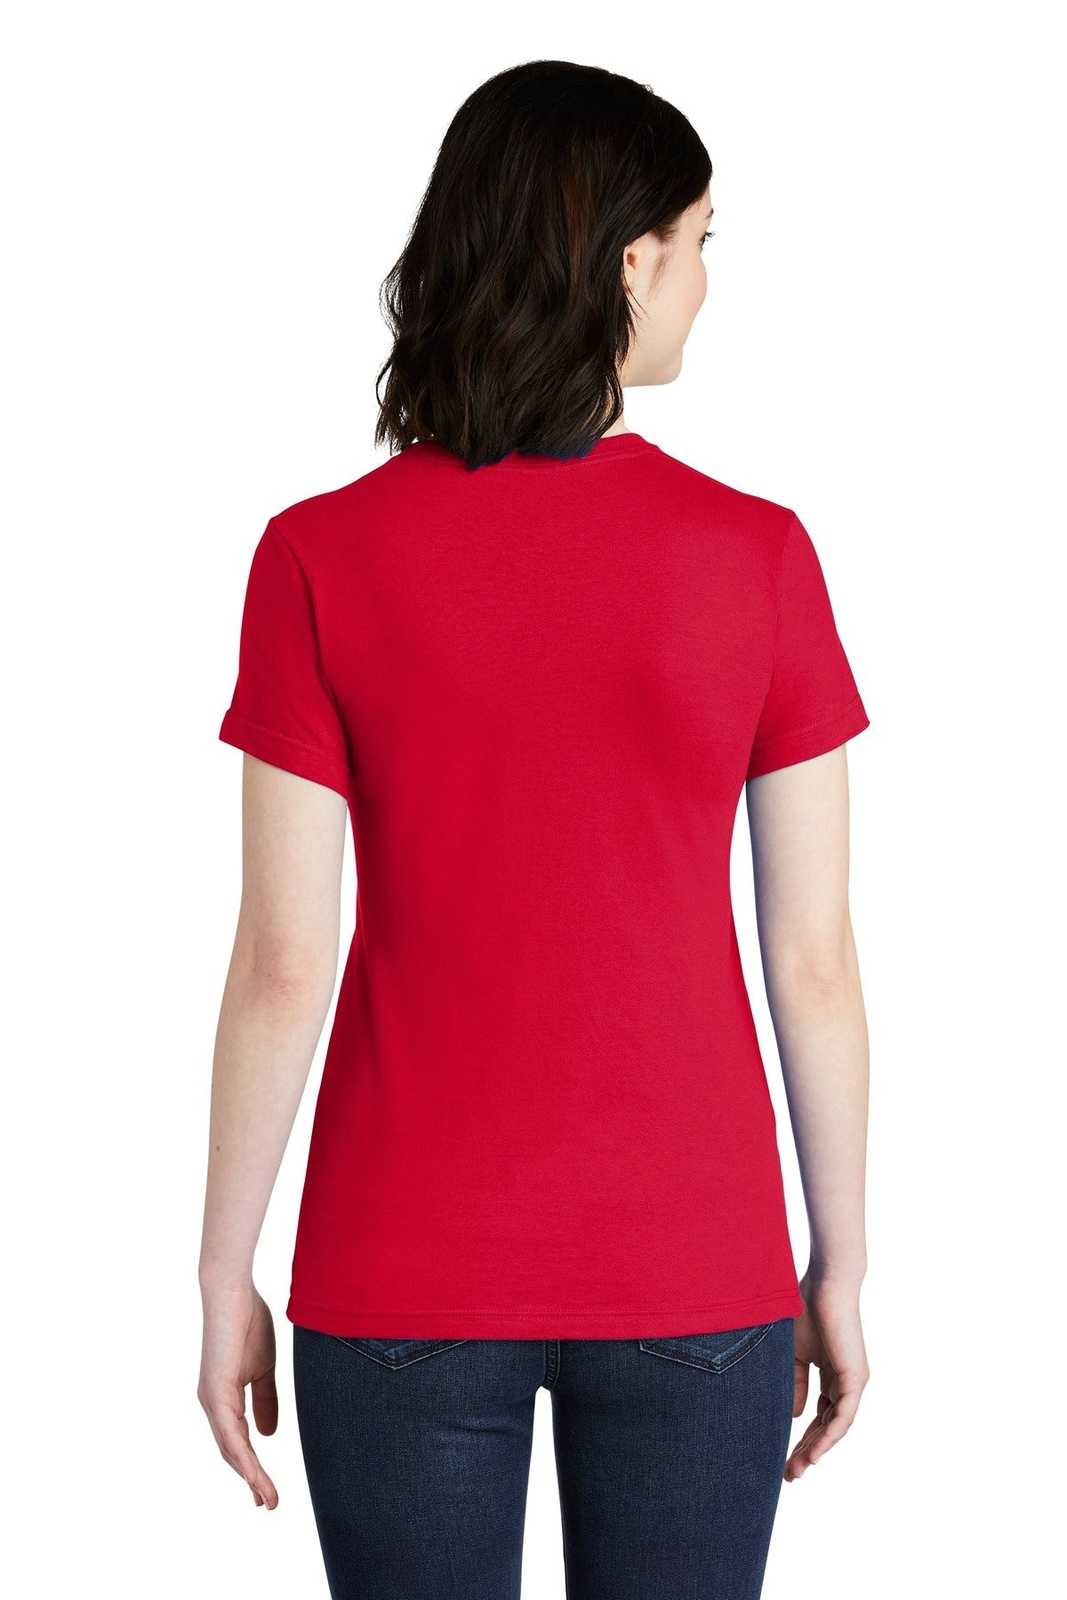 American Apparel 2102W Women's Fine Jersey T-Shirt - Red - HIT a Double